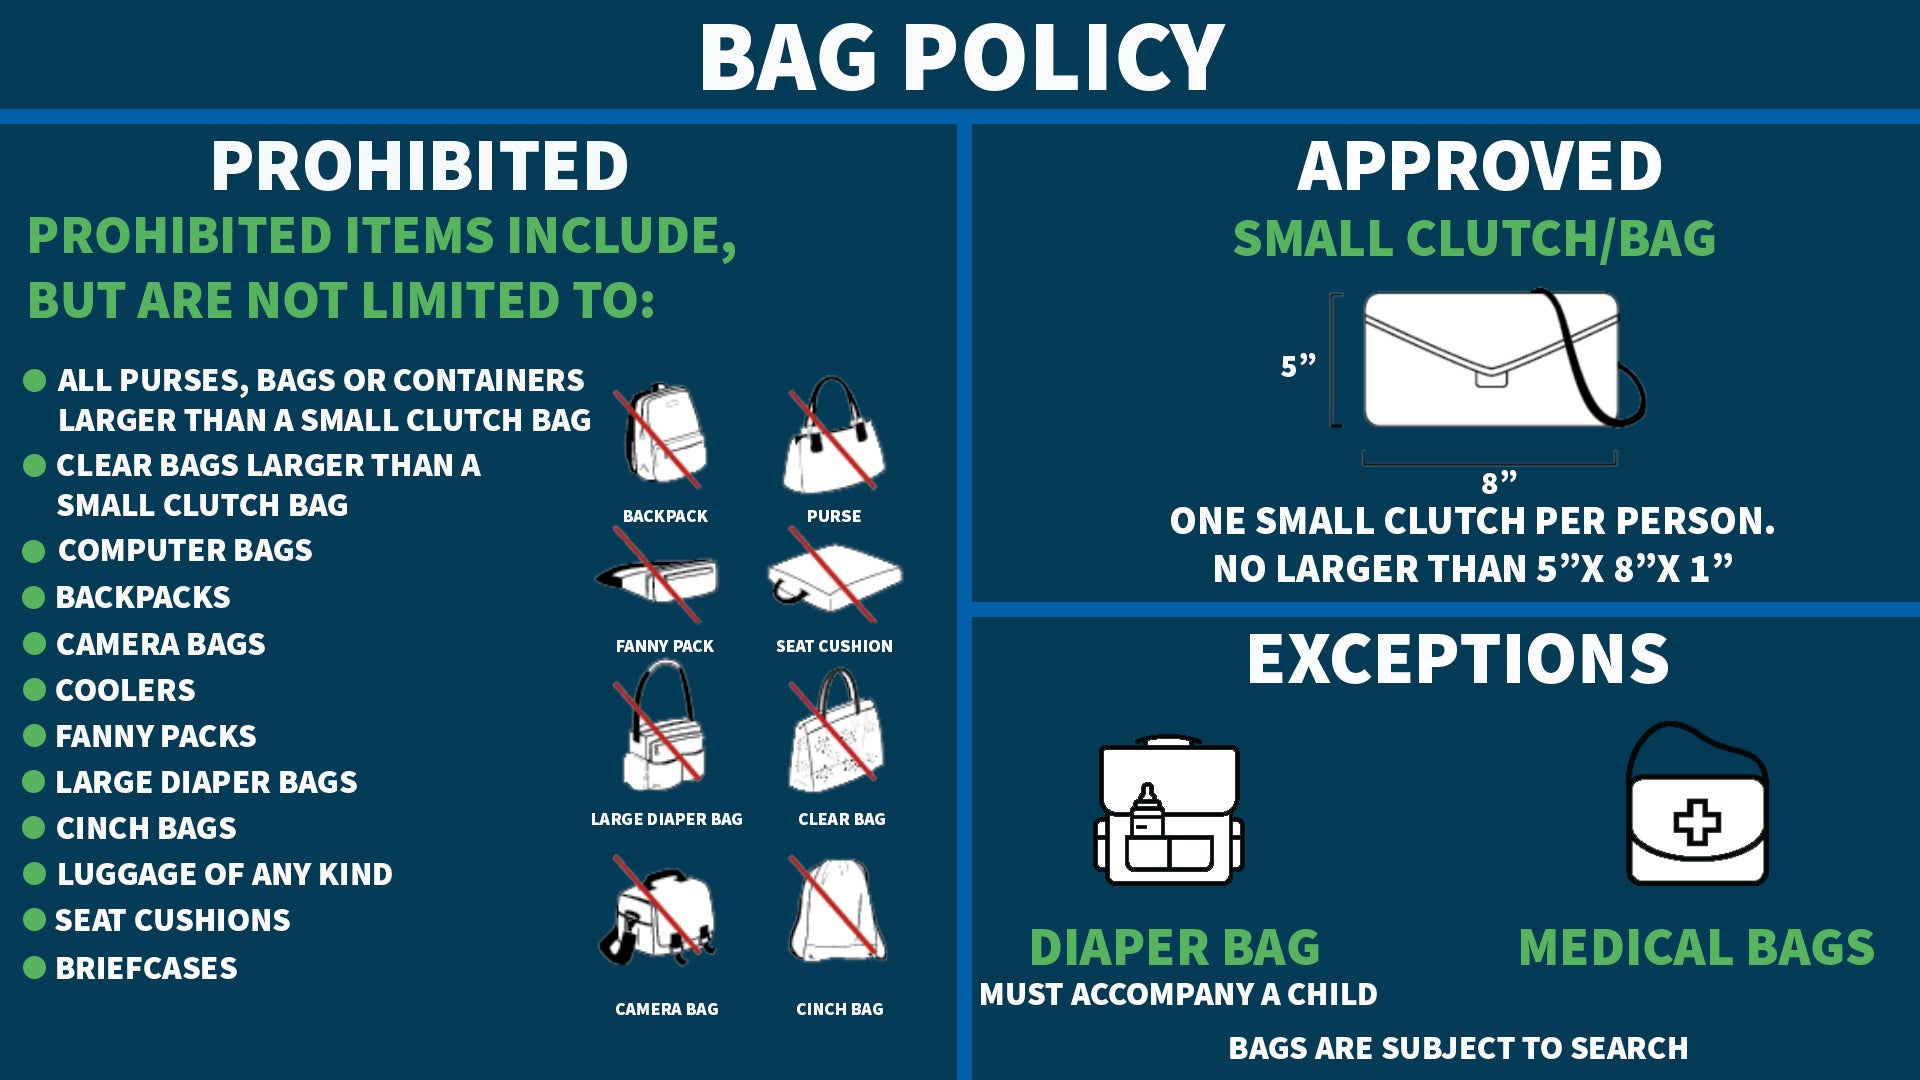 bag policy_1920x1080.jpg